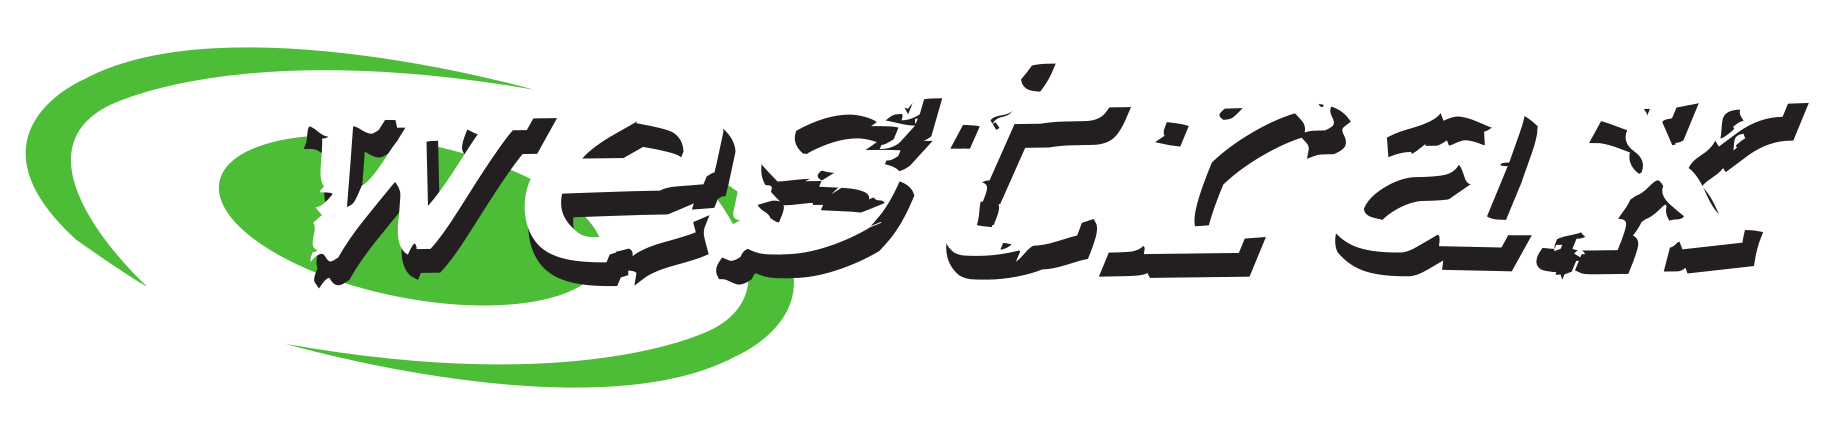 Westrax Logo